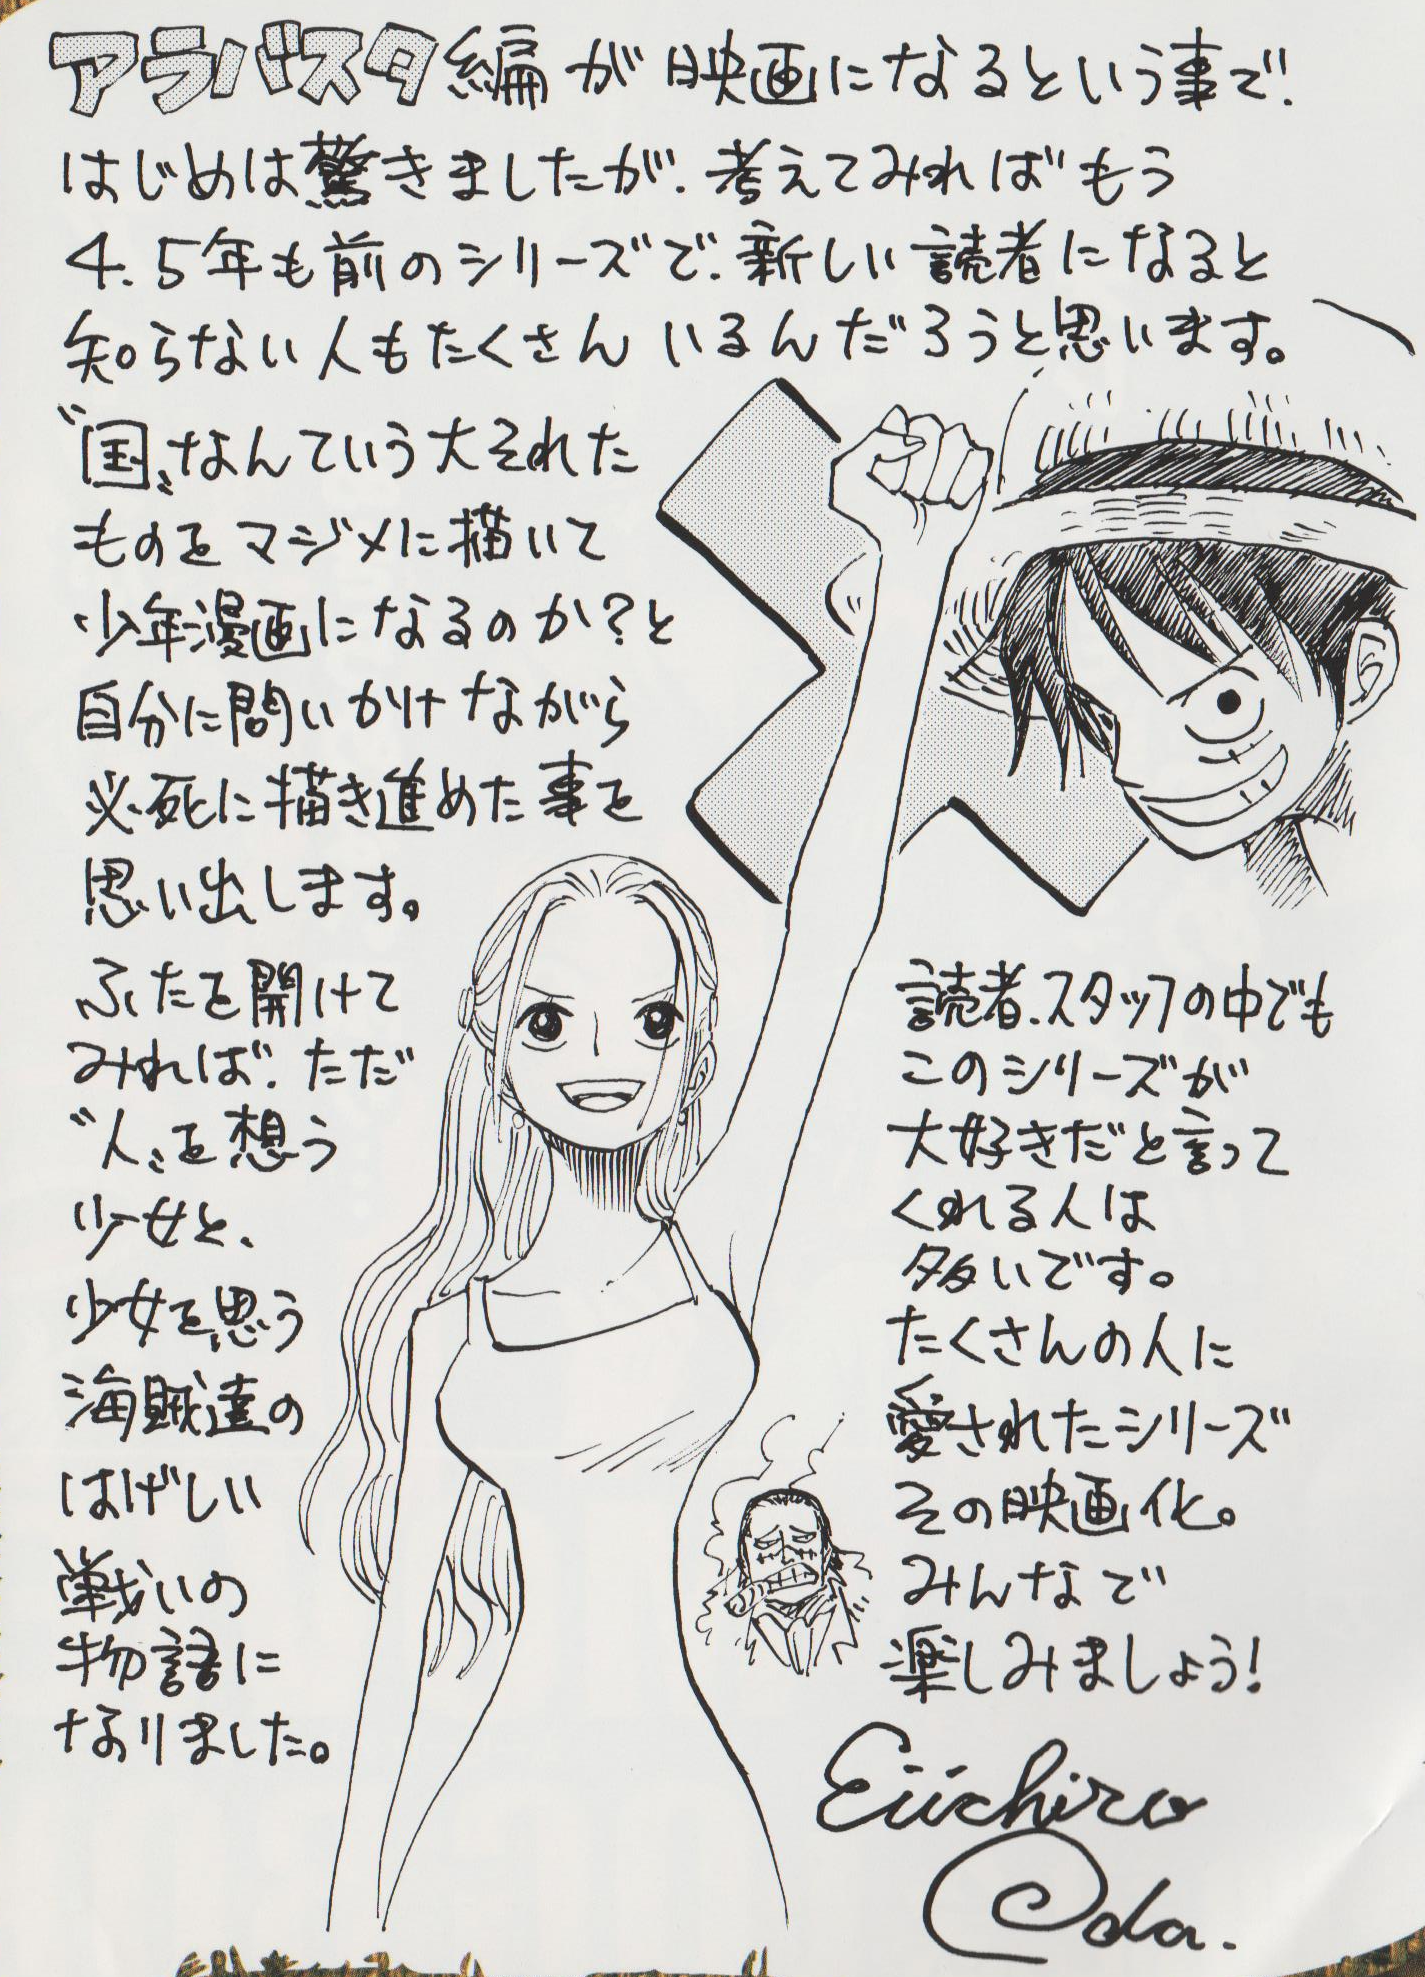 Pirate Fashion: 'One Piece' creator Eiichiro Oda sketches lookbook